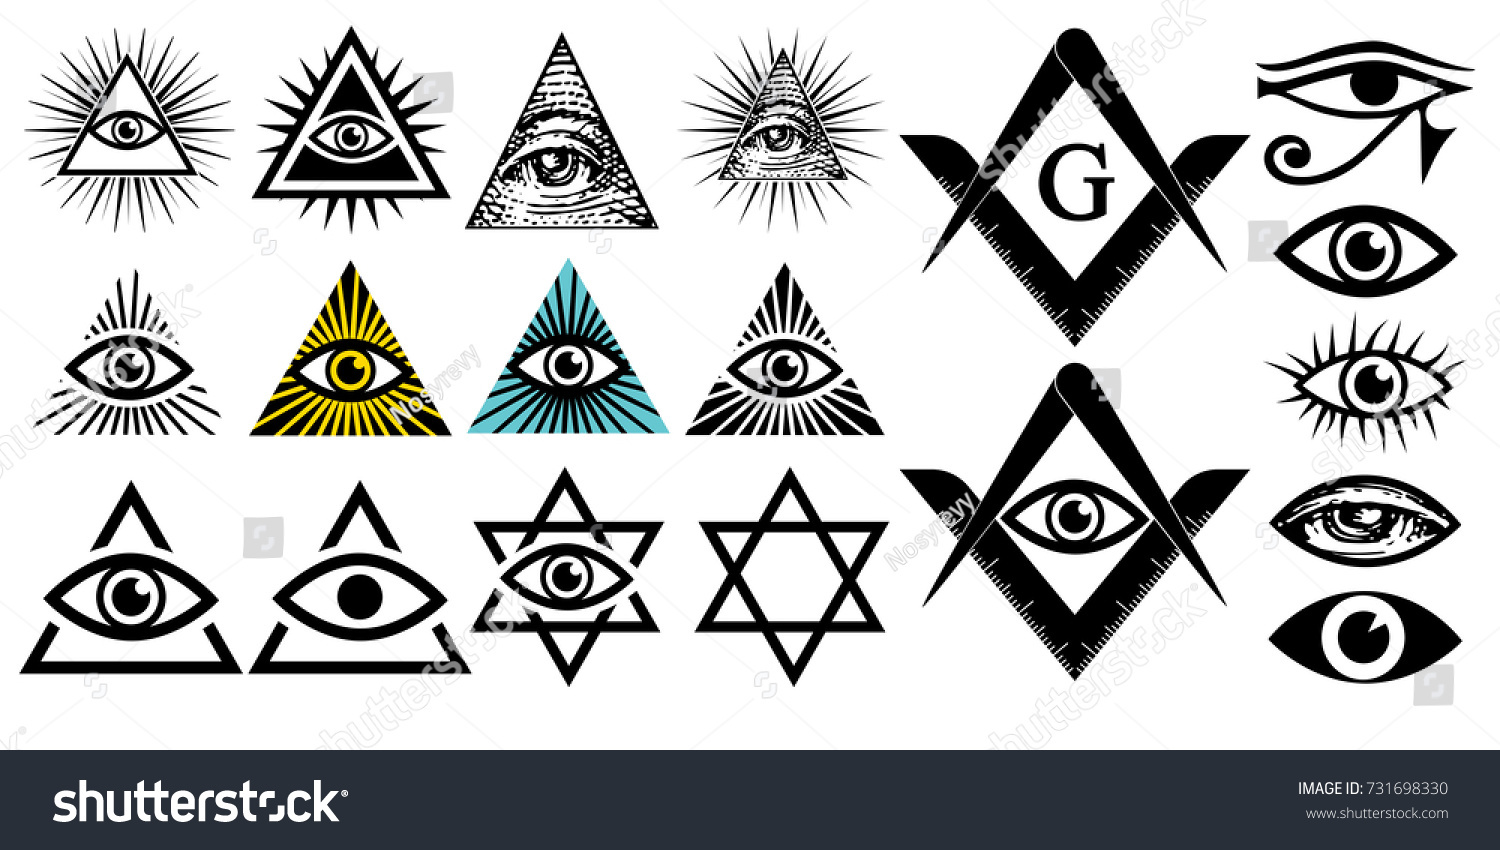 Illuminati Images Symbols - KibrisPDR